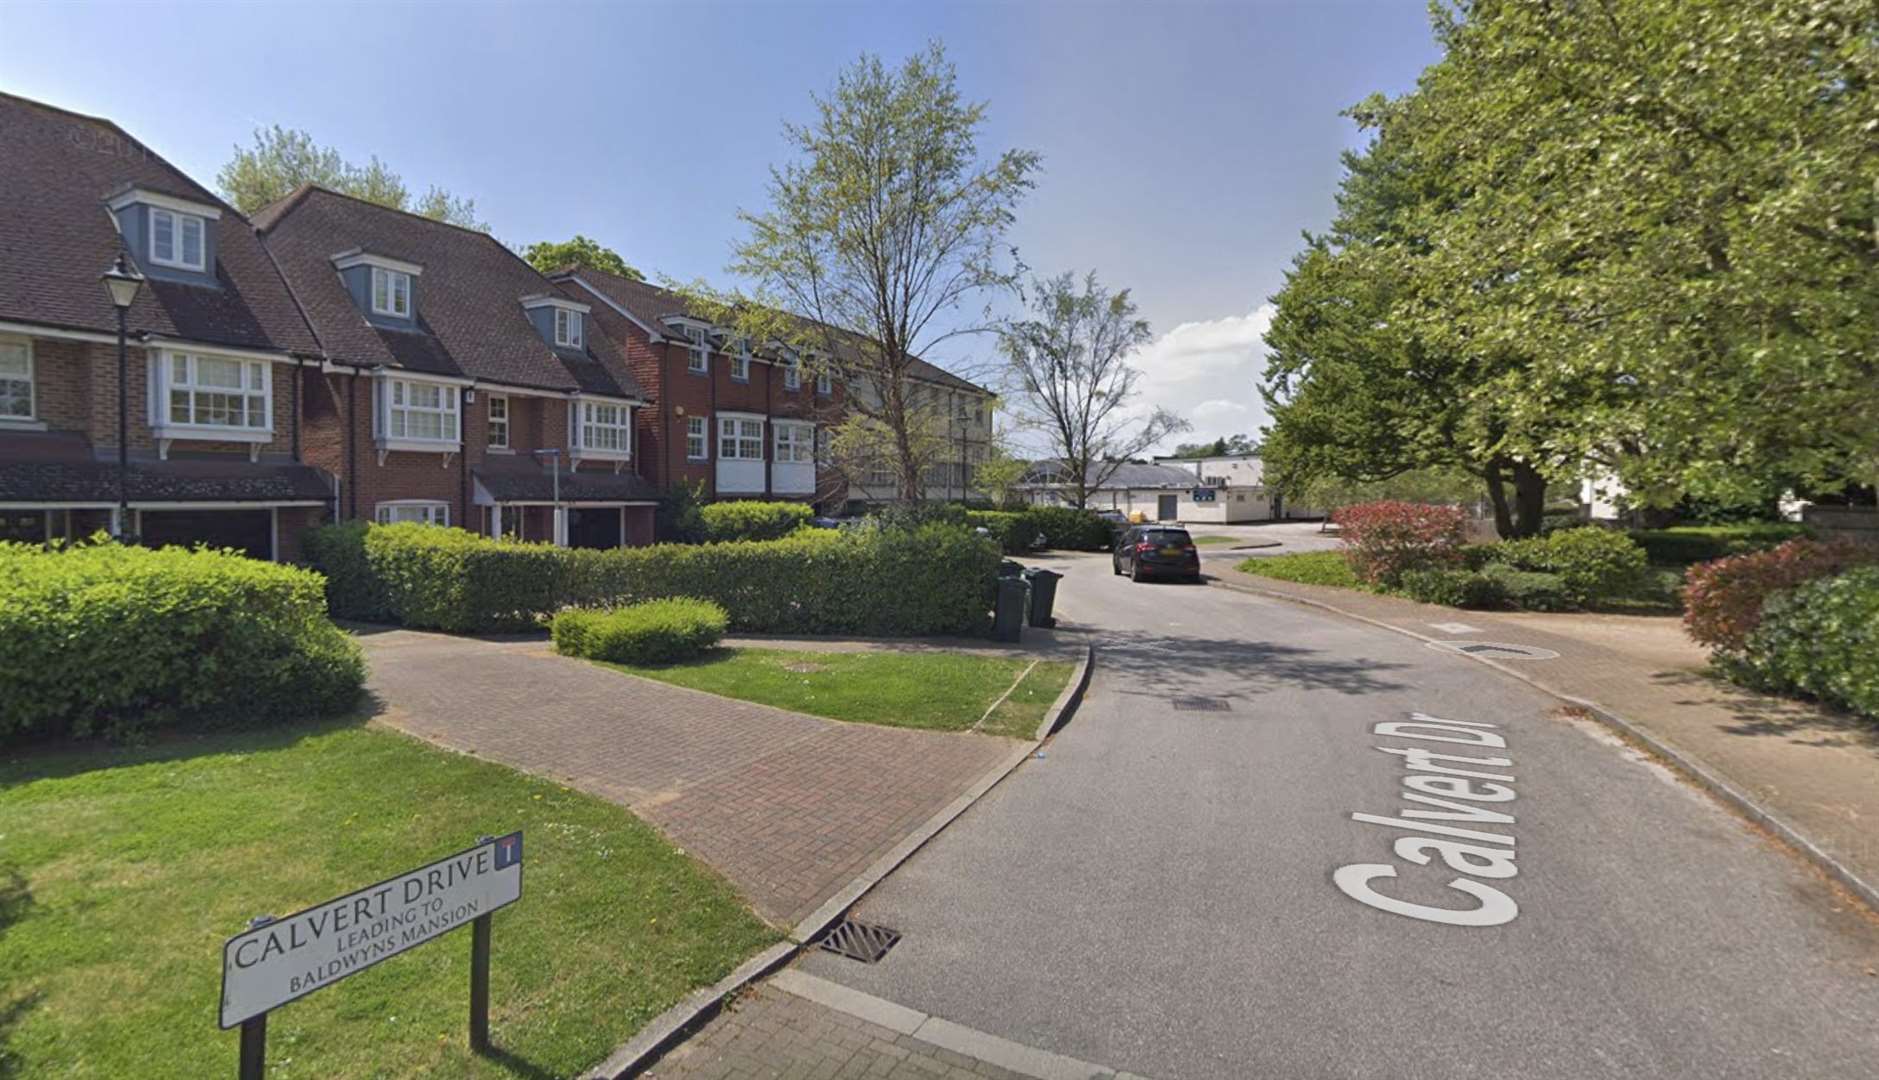 The assault happened in Calvert Drive, Dartford. Picture: Google Maps